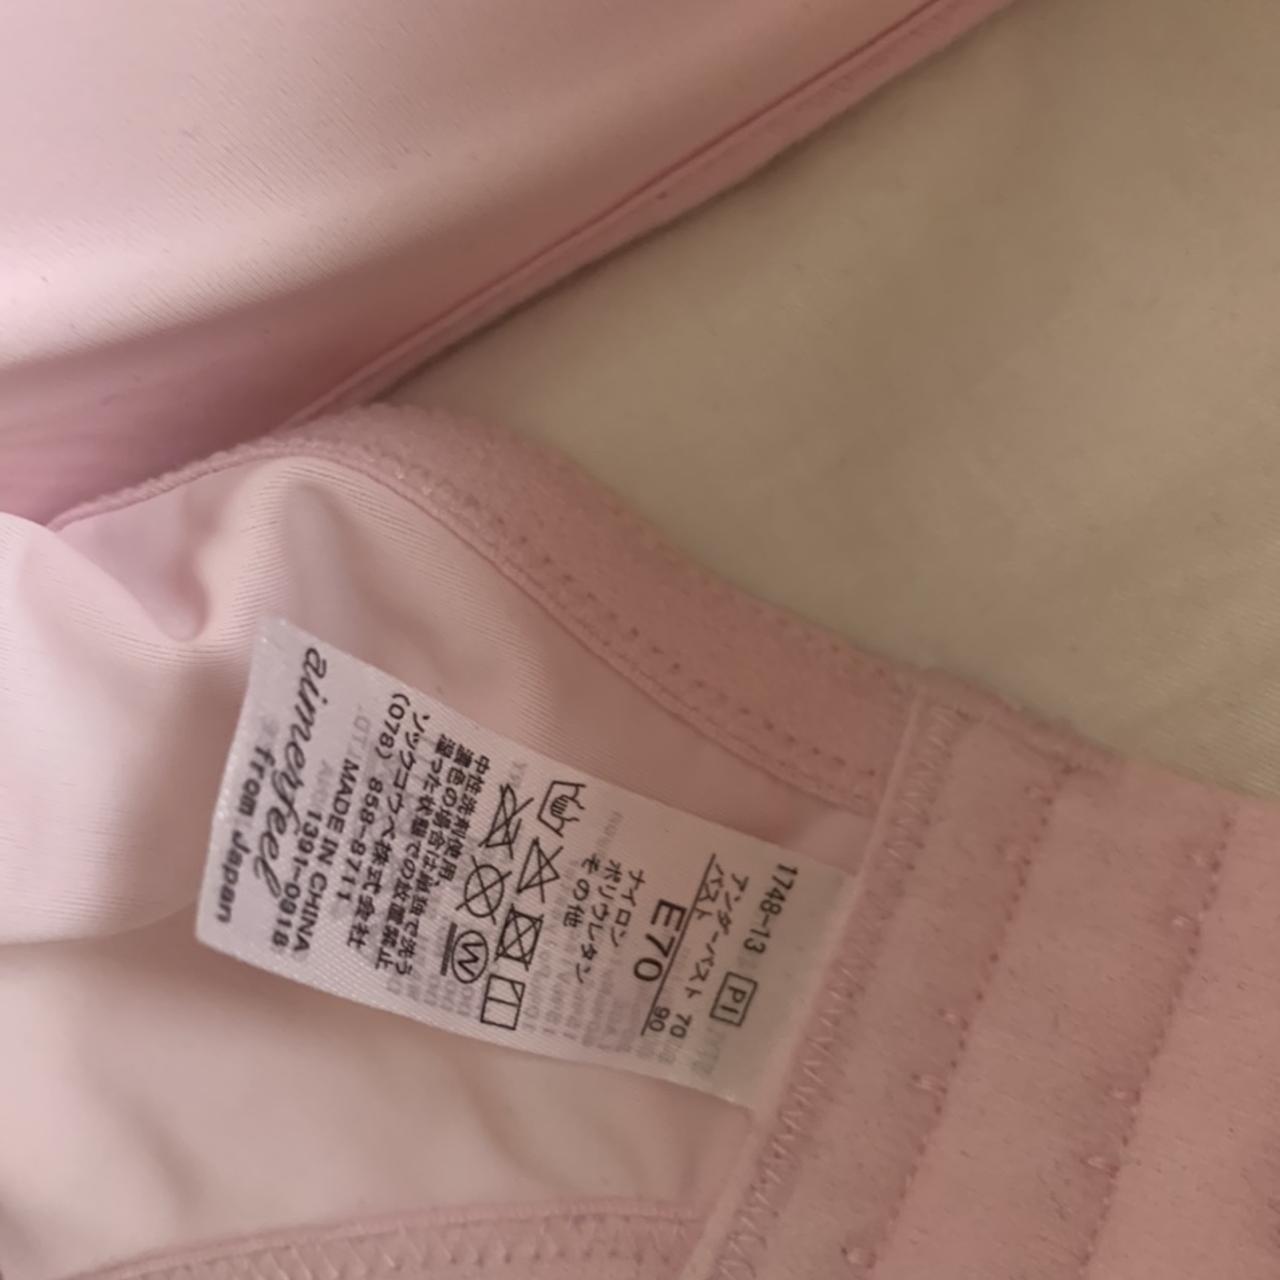 Aimerfeel pink bra Japan Size e70 (fits US B or C - Depop